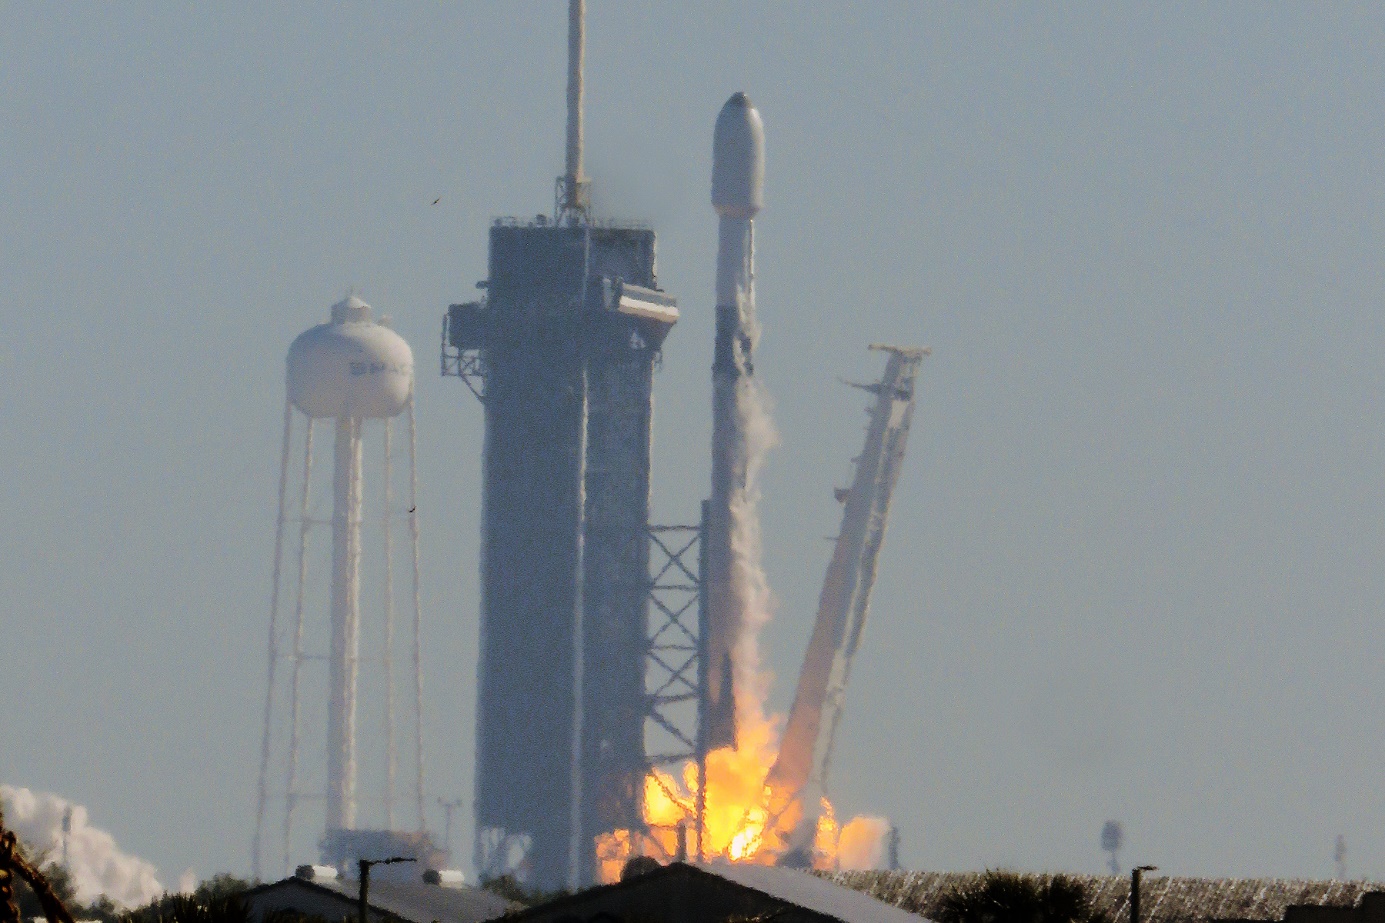 Falcon 9 Starlink 4-9 Launch, Photo Courtesy Carleton Bailie, Spaceline